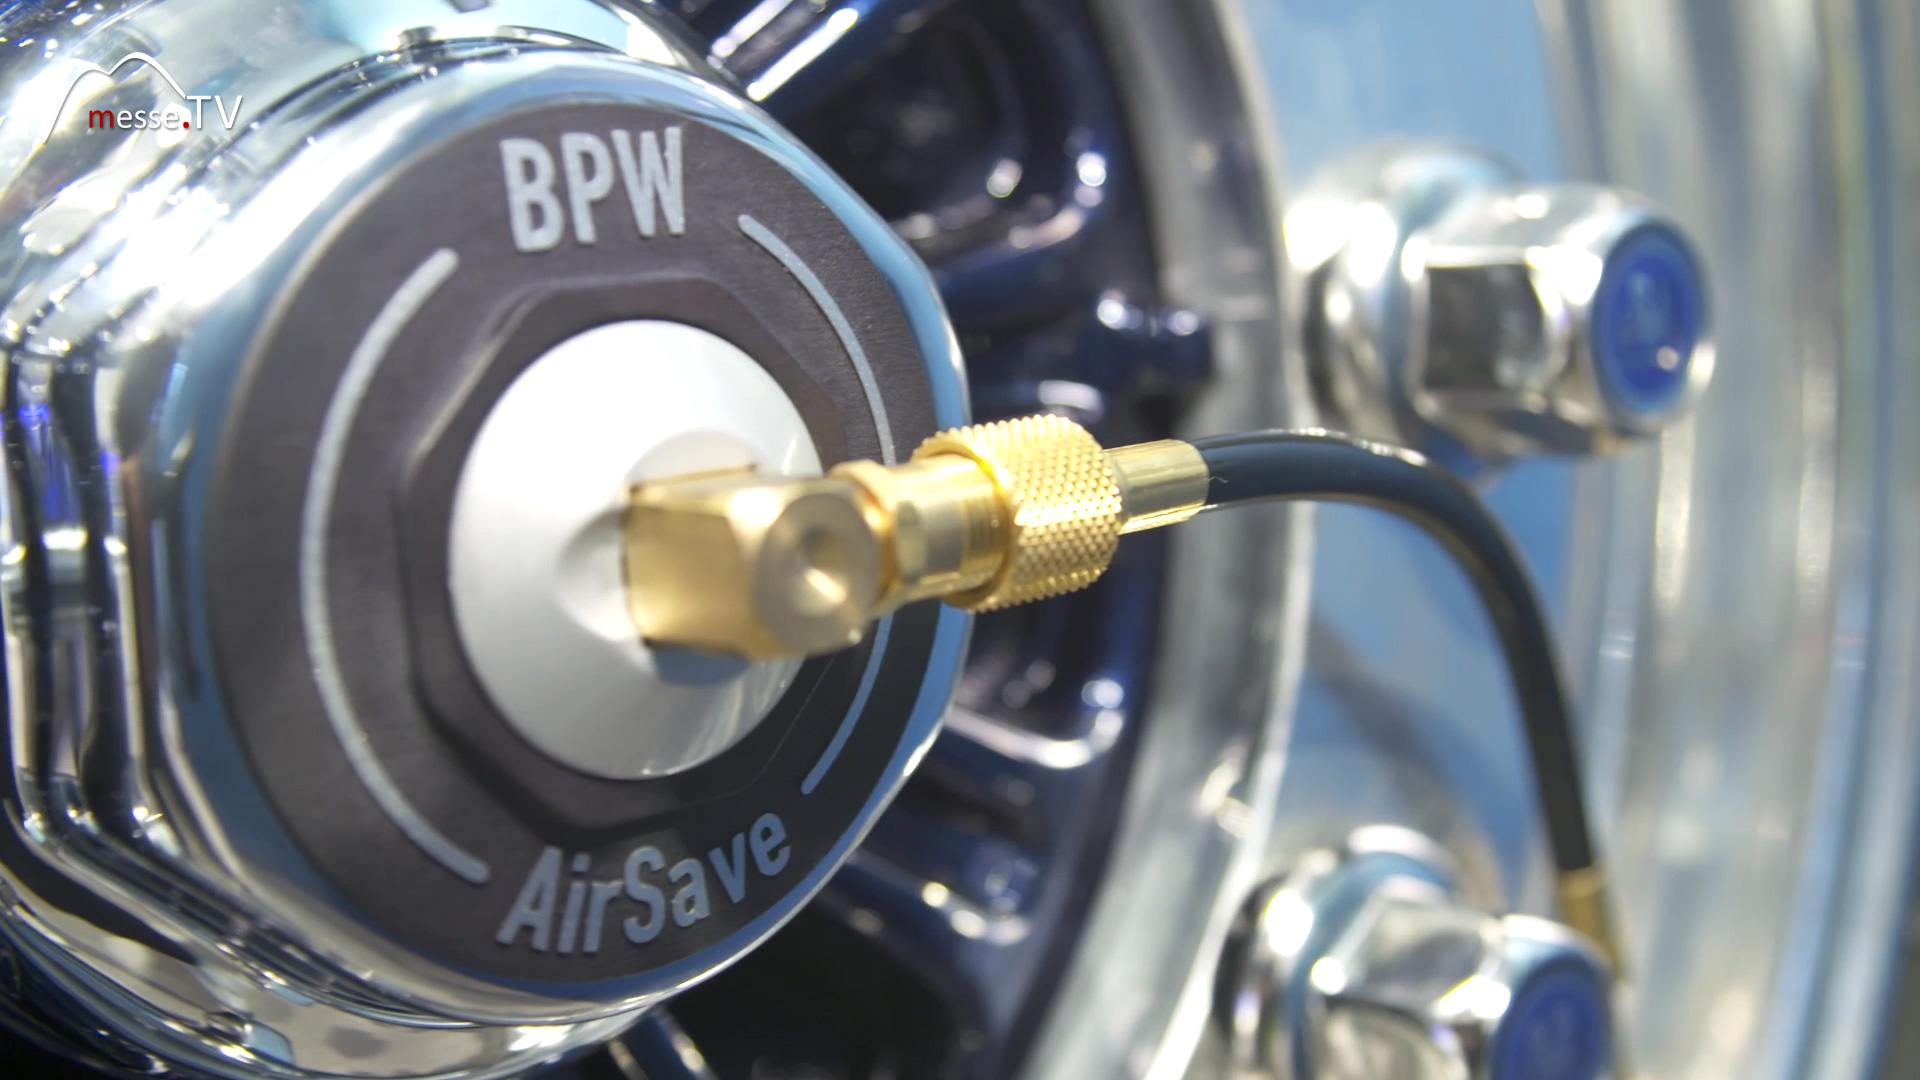 BPW AirSafe truck tire pressure control system